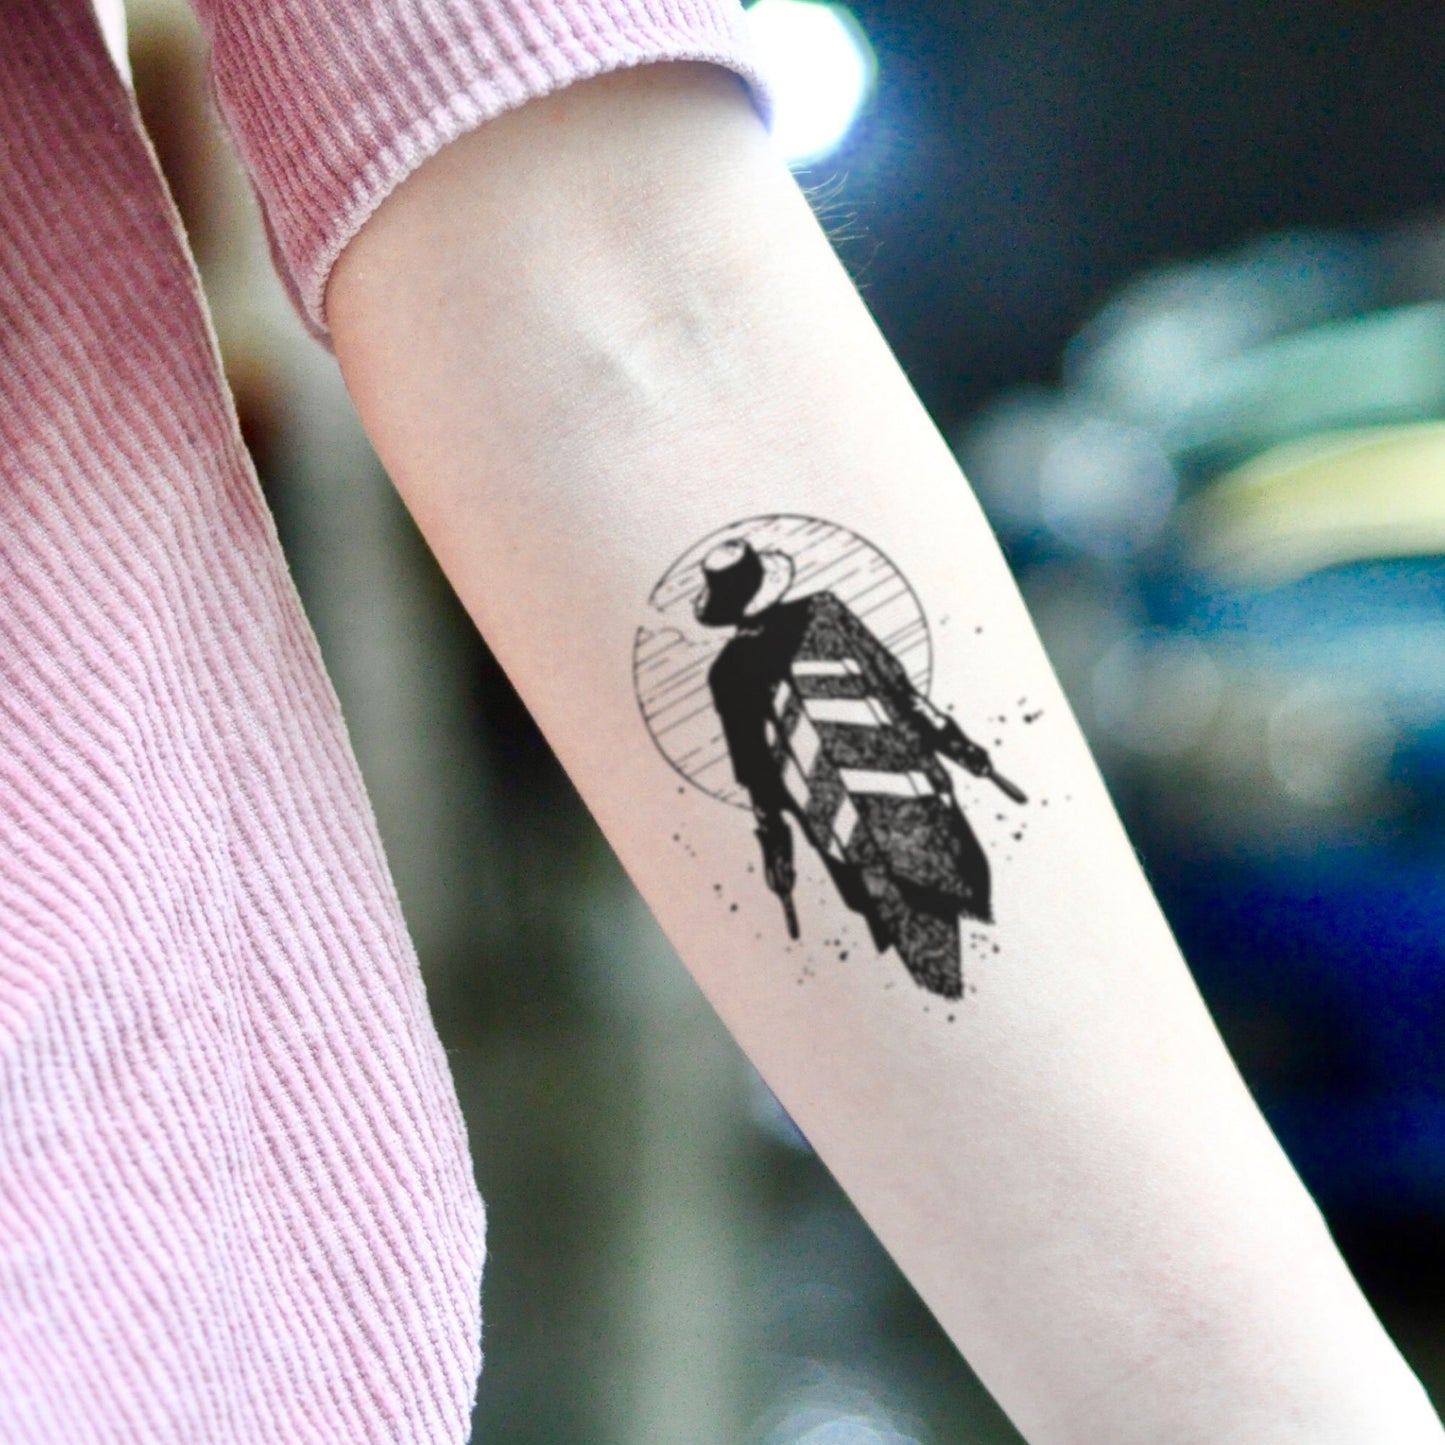 fake small gunslinger cowboy illustrative temporary tattoo sticker design idea on inner arm